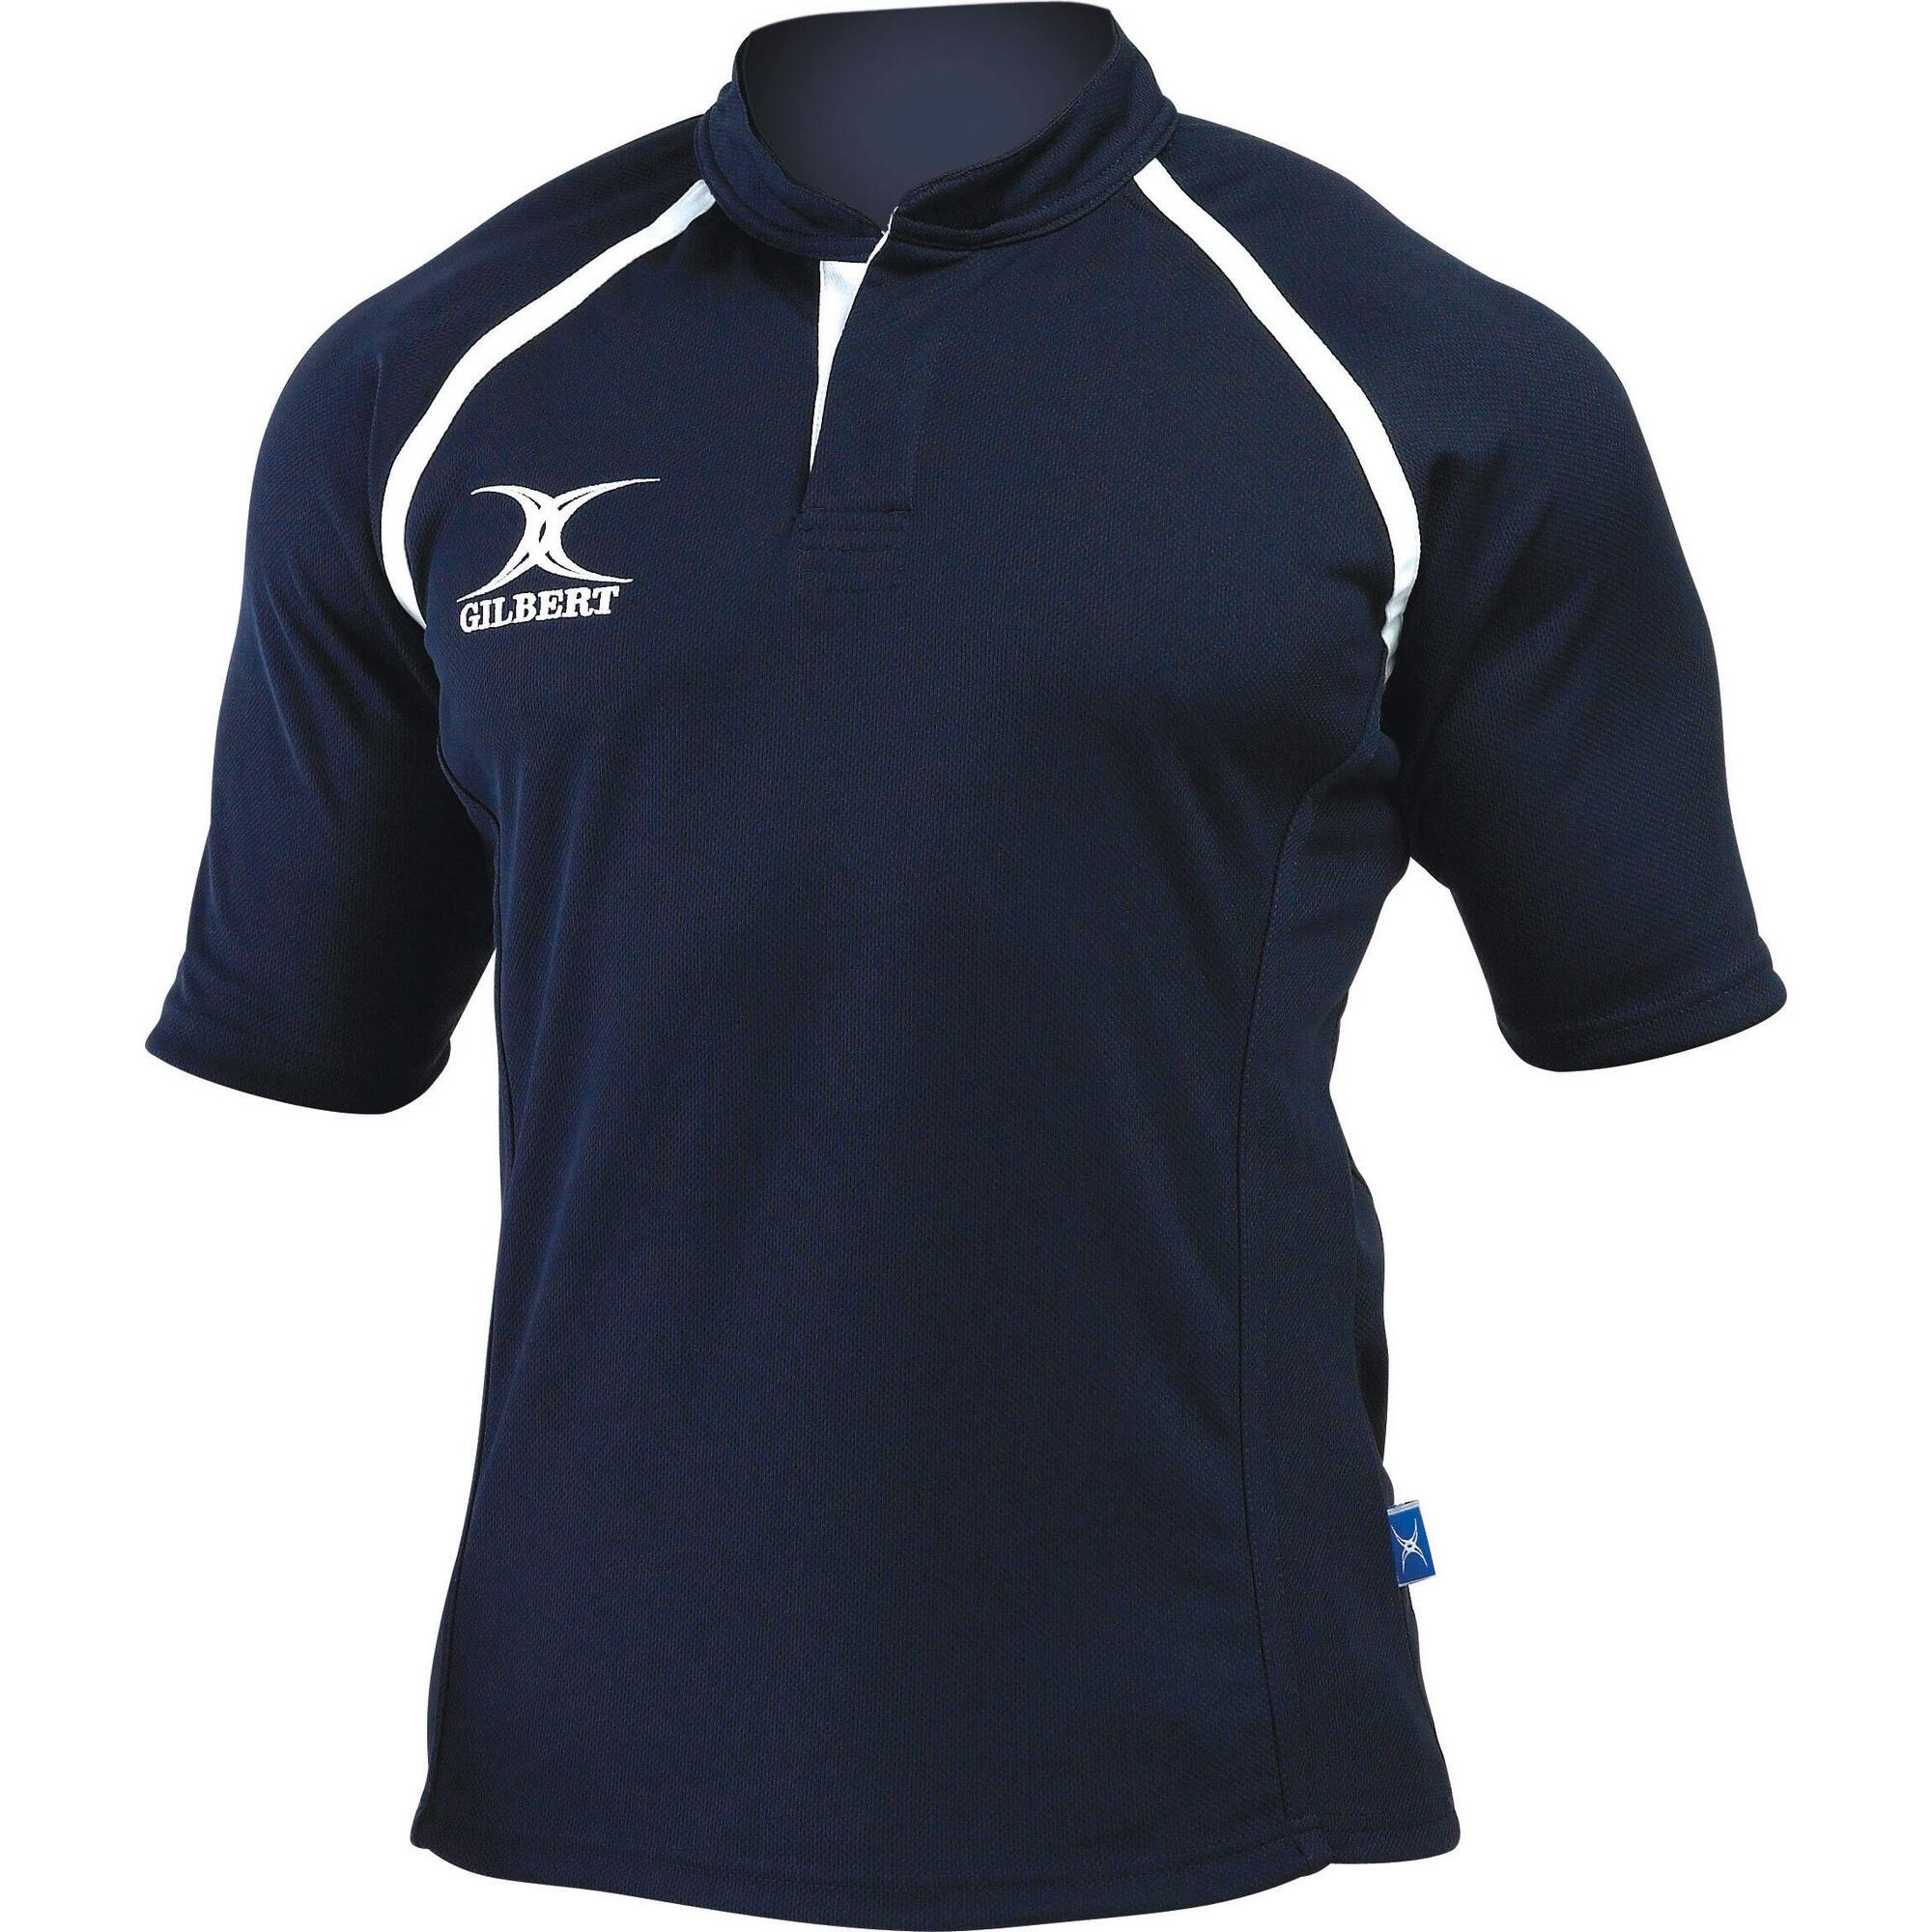 GILBERT Rugby Childrens/Kids Xact Match Short Sleeved Rugby Shirt (Navy)